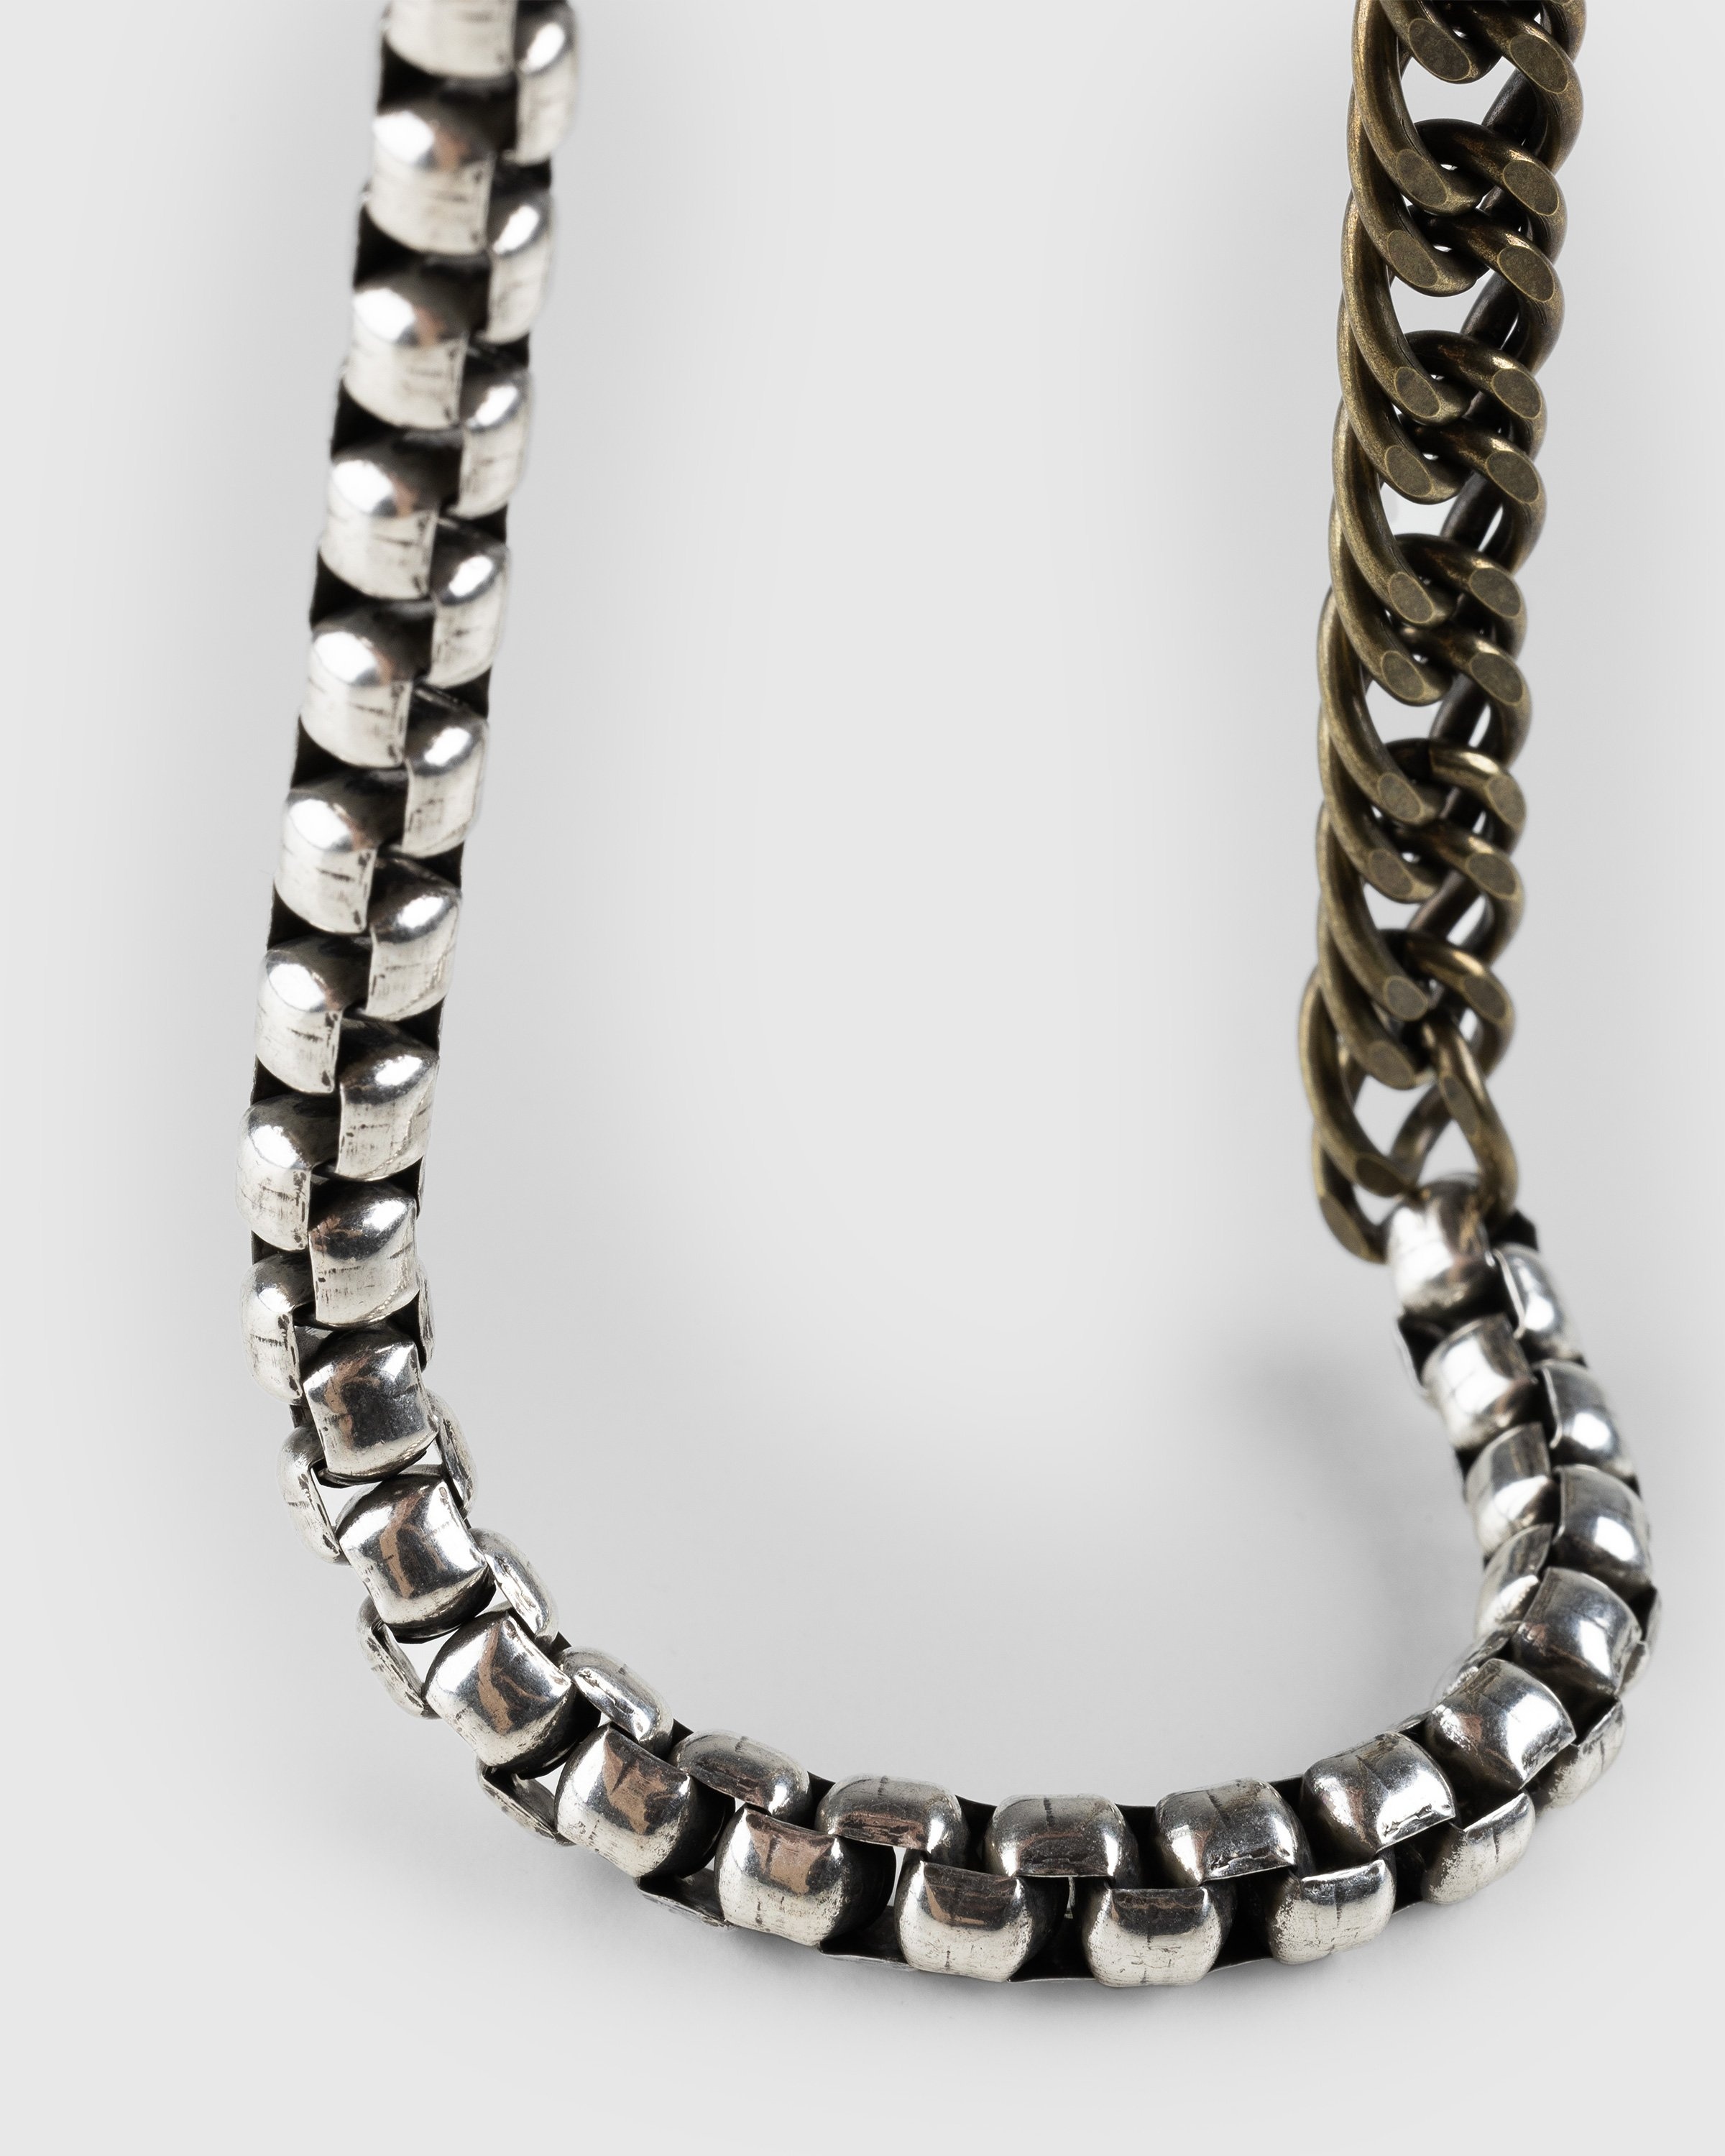 Dries van Noten – M232-206 Necklace Black - Jewelry - Silver - Image 2